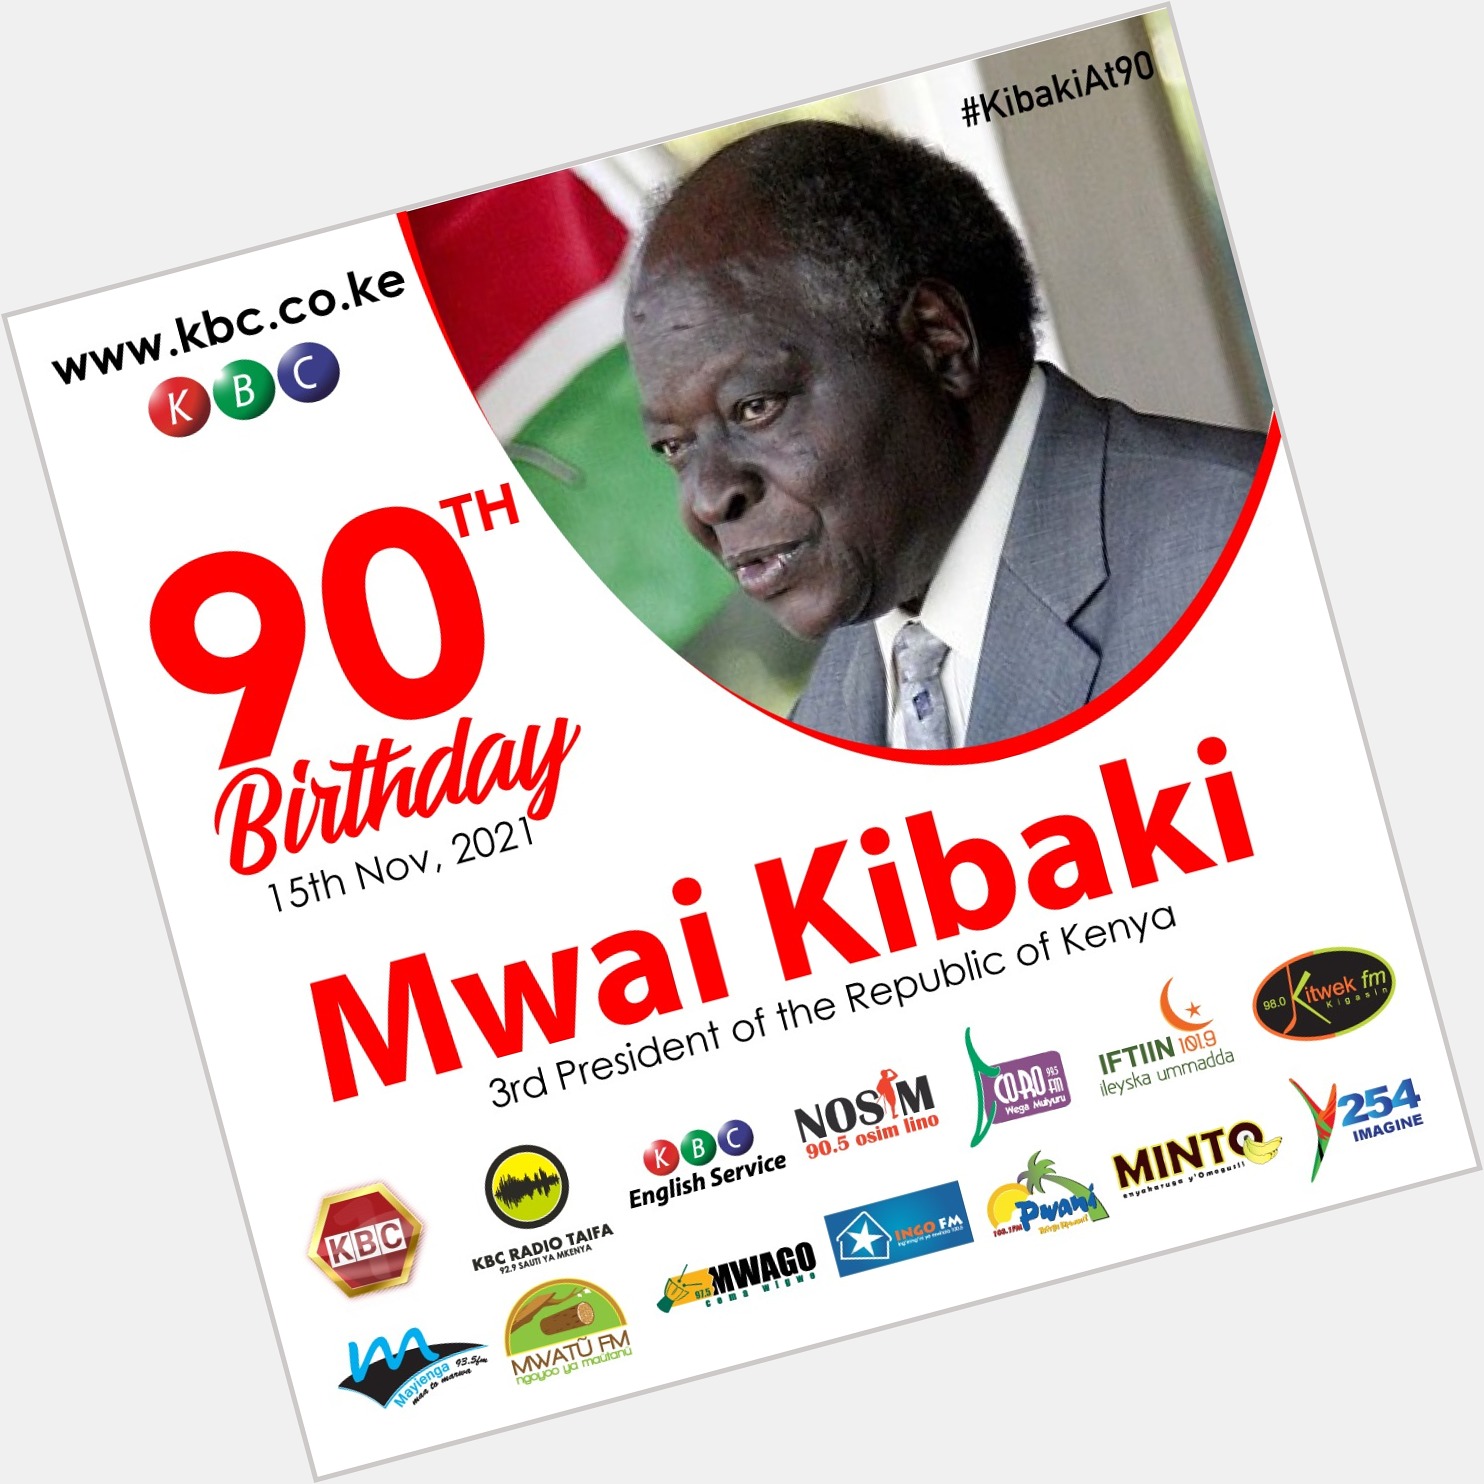 Join us in wishing former President Mwai Kibaki a very happy birthday! He turns 90 today. 